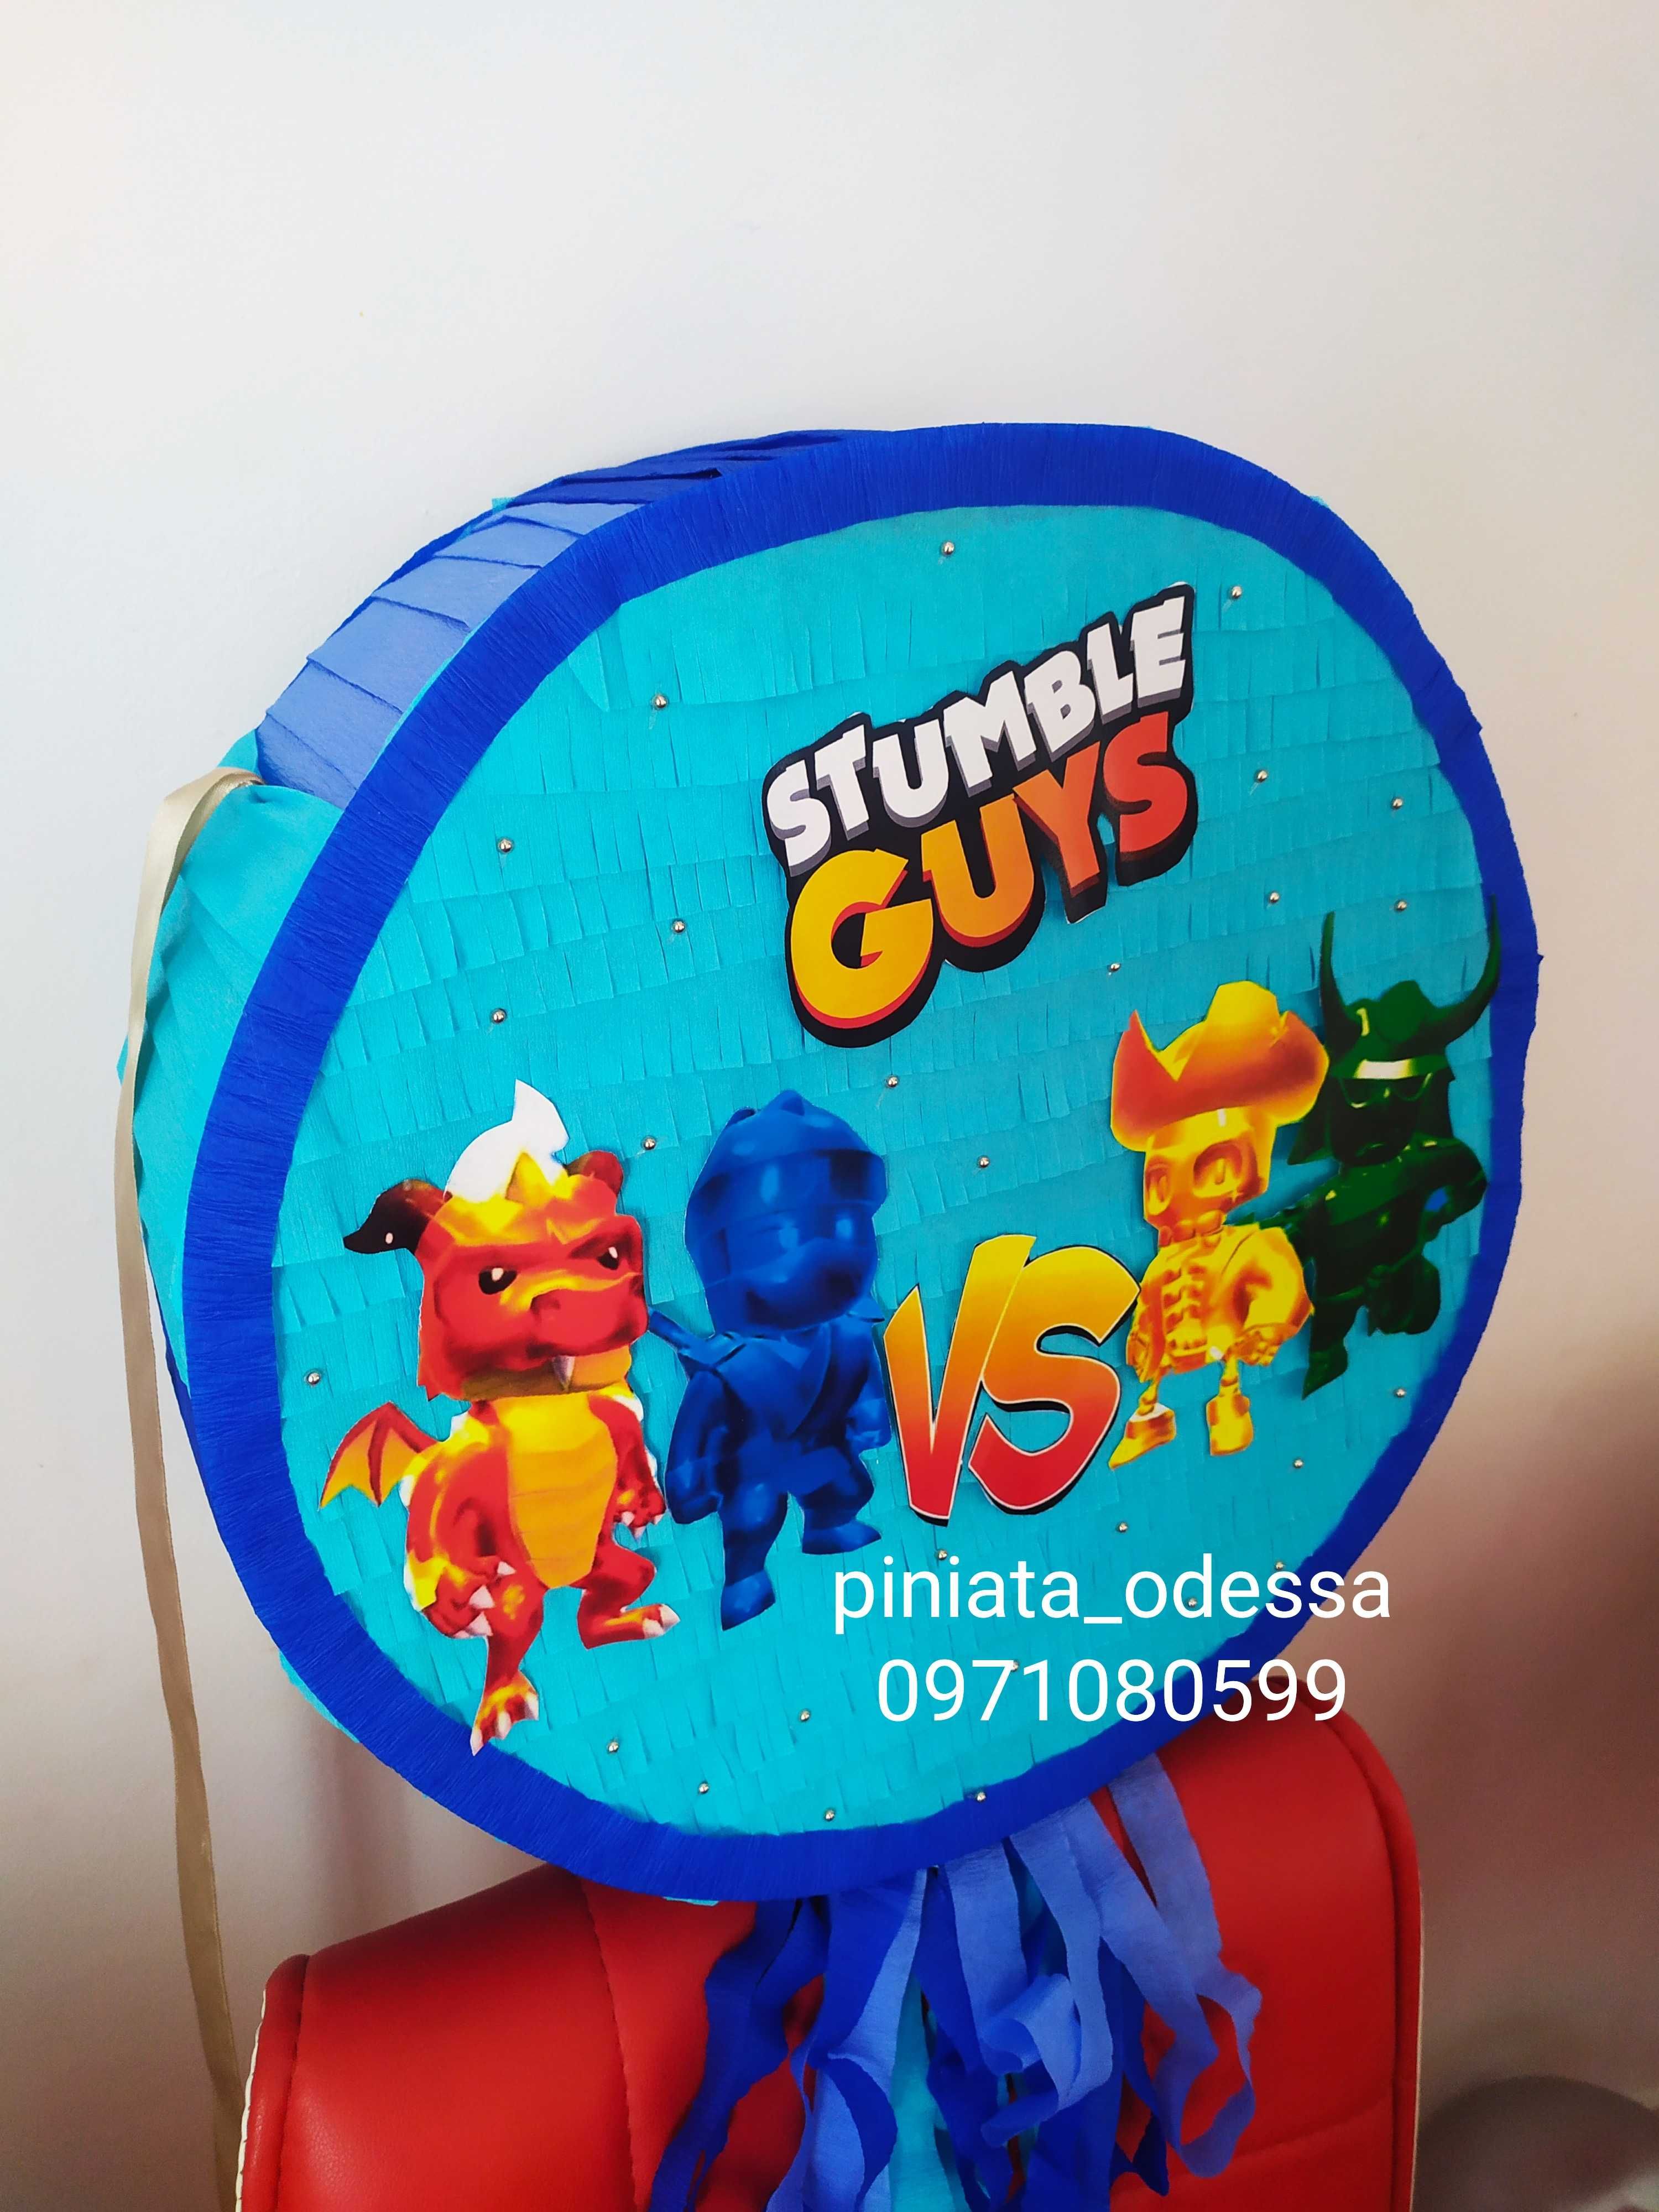 Pinata Stumble Guys ( piniata Stumble guys) piñata